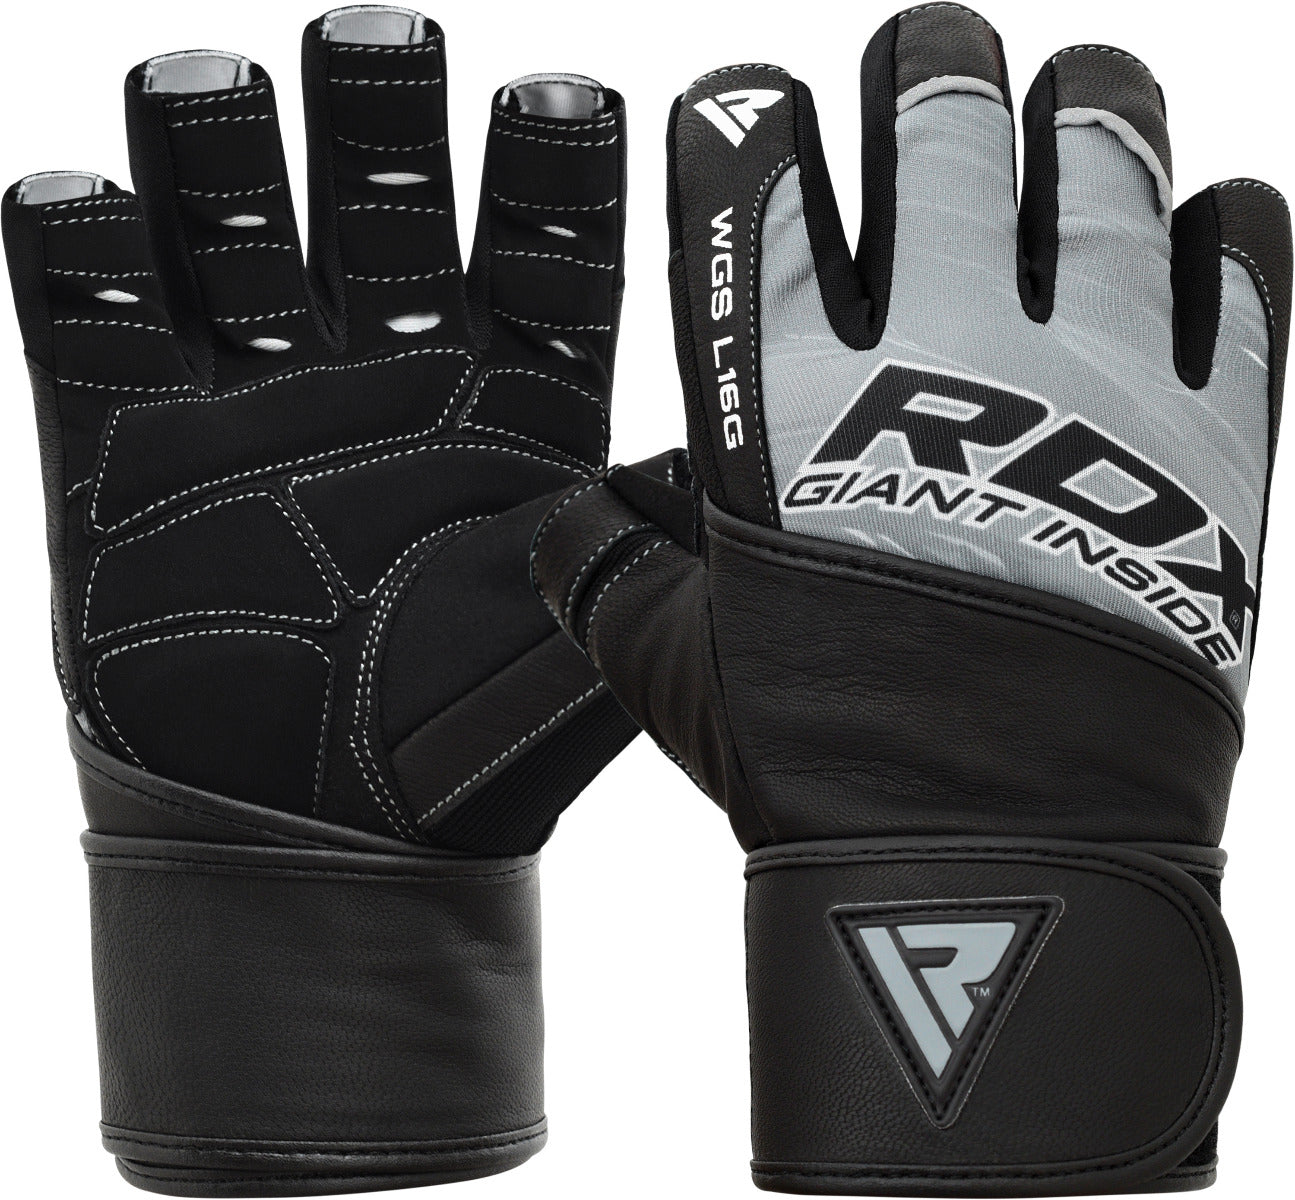 RDX L16 Gym Gloves with Wrist Strap